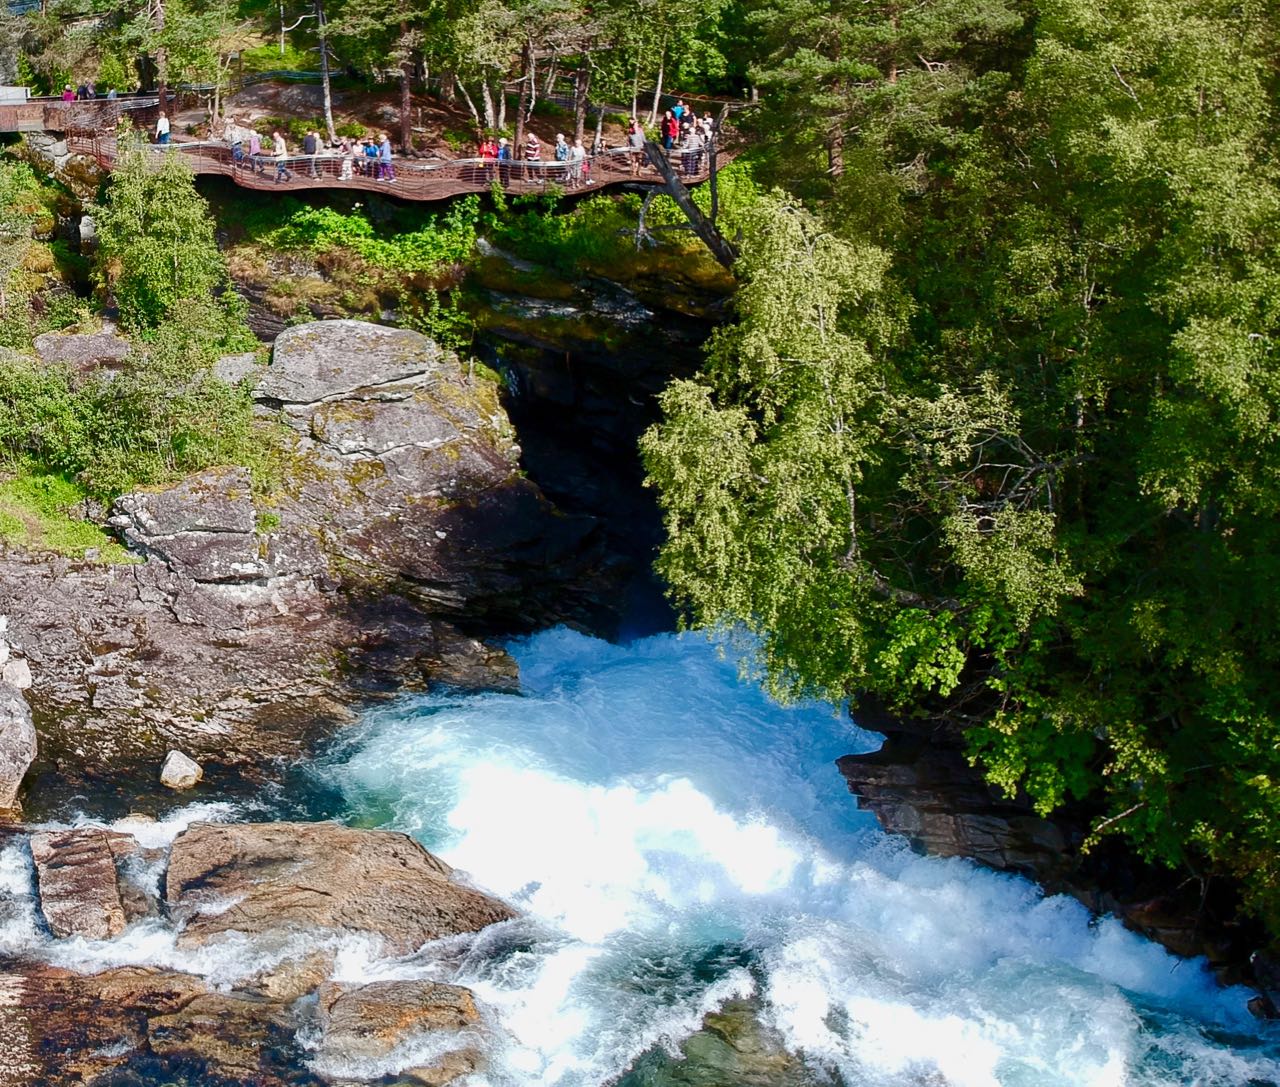 Reiserute bilferie Norge Gudbrandsjuvet drone foto utsikt plattform